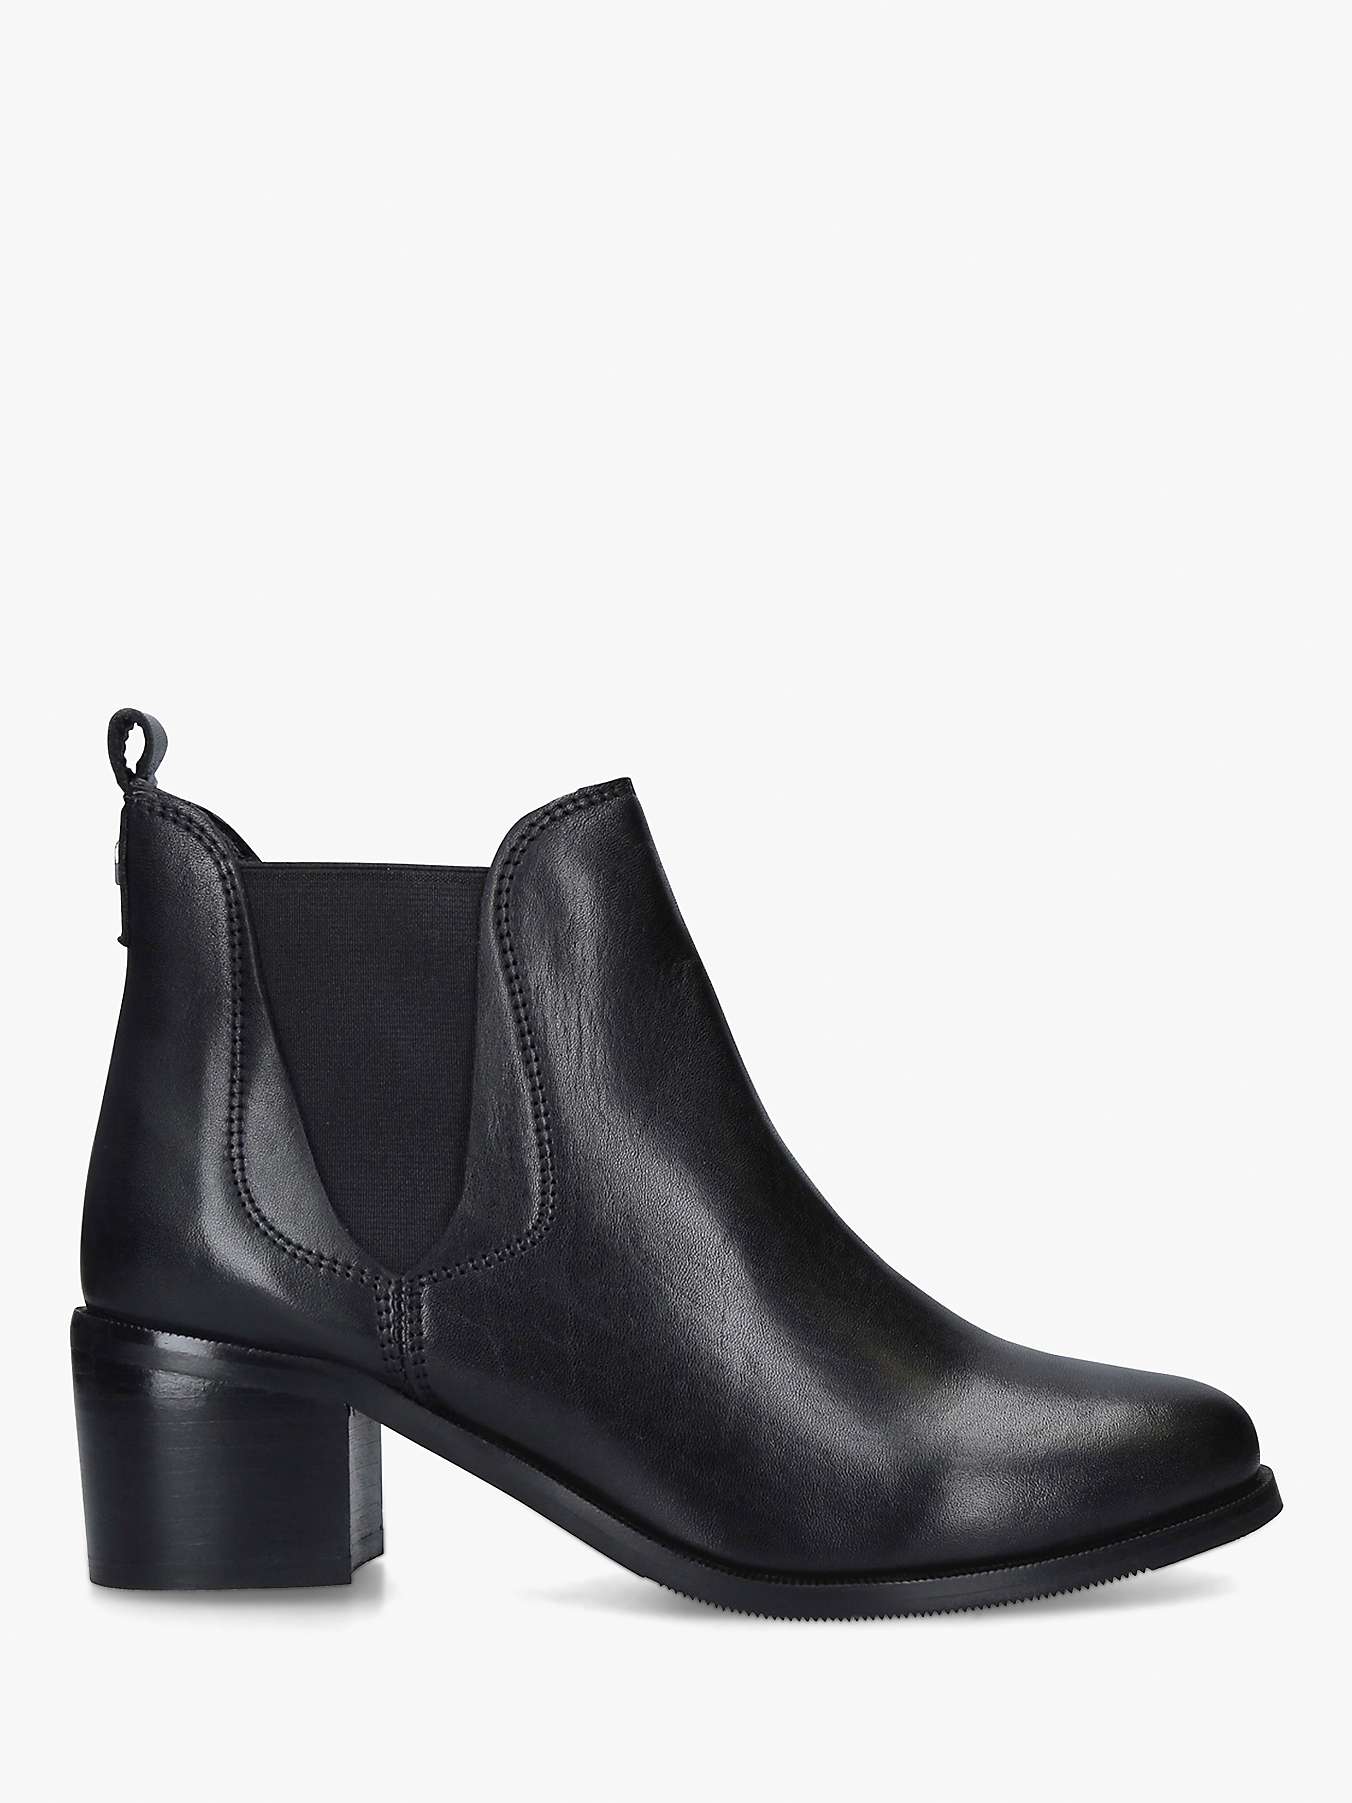 Buy Carvela Comfort Ronald Block Heel Leather Ankle Boots Online at johnlewis.com